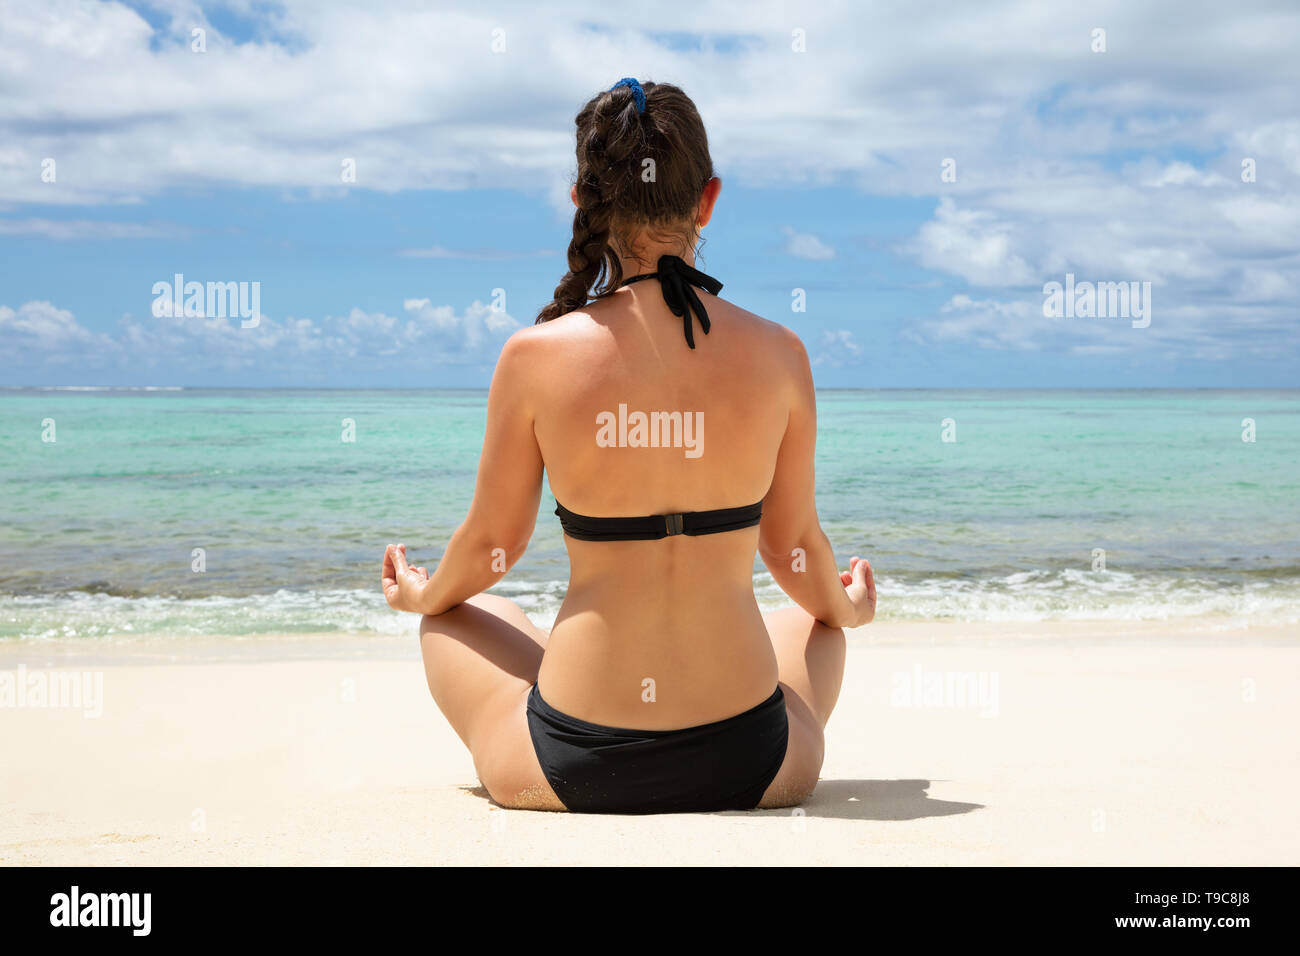 Deter Flikkeren Zorgvuldig lezen Rear View Of A Woman In Black Bikini Meditating On Beach Near The Turquoise  Sea Stock Photo - Alamy